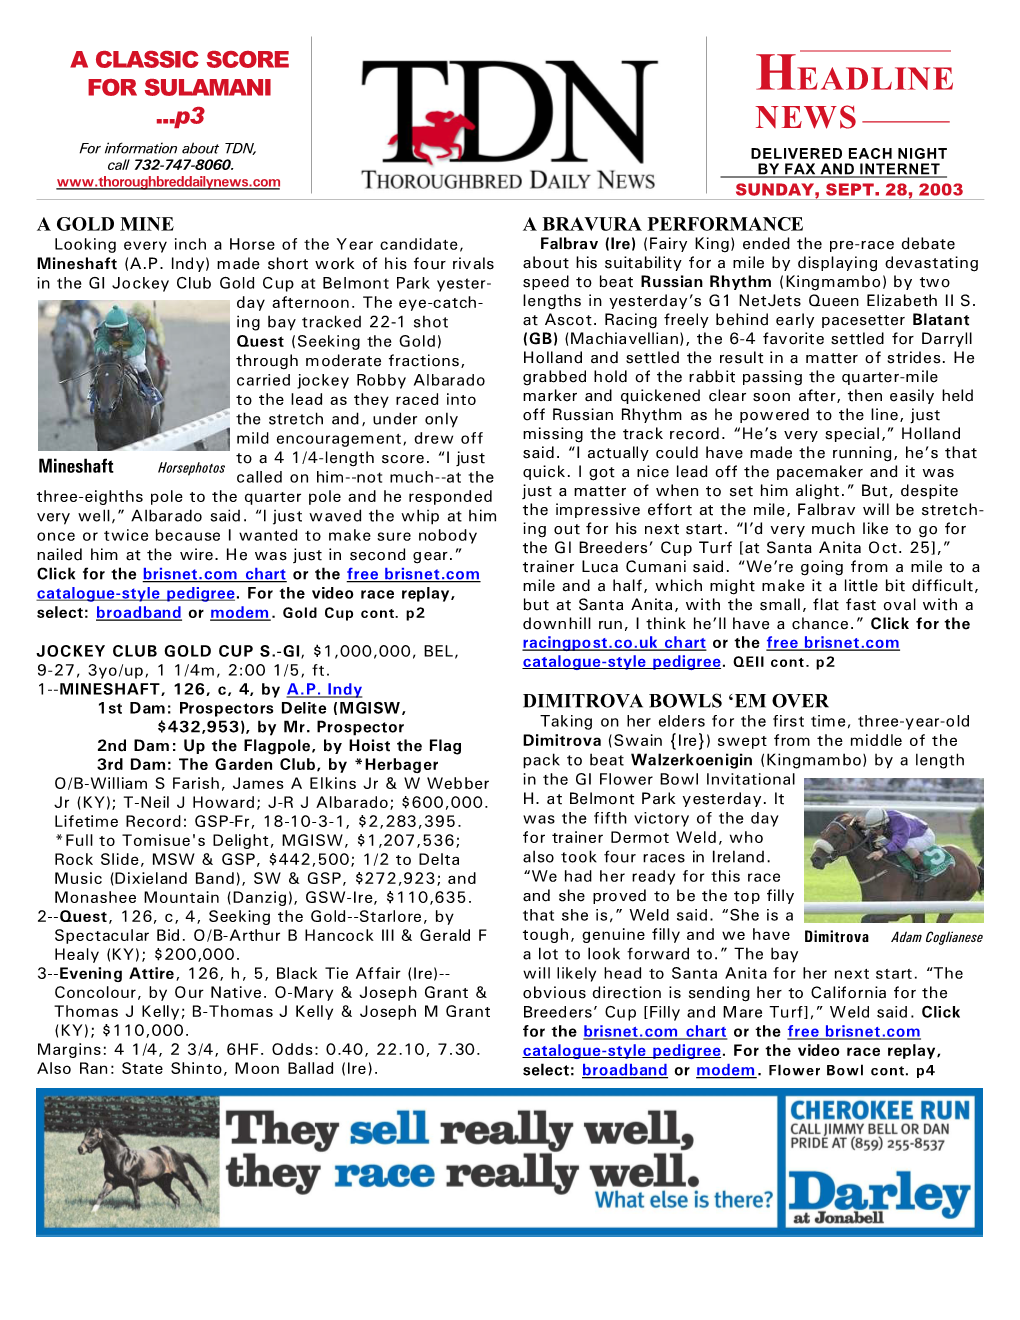 HEADLINE NEWS • 9/28/03 • PAGE 2 of 12